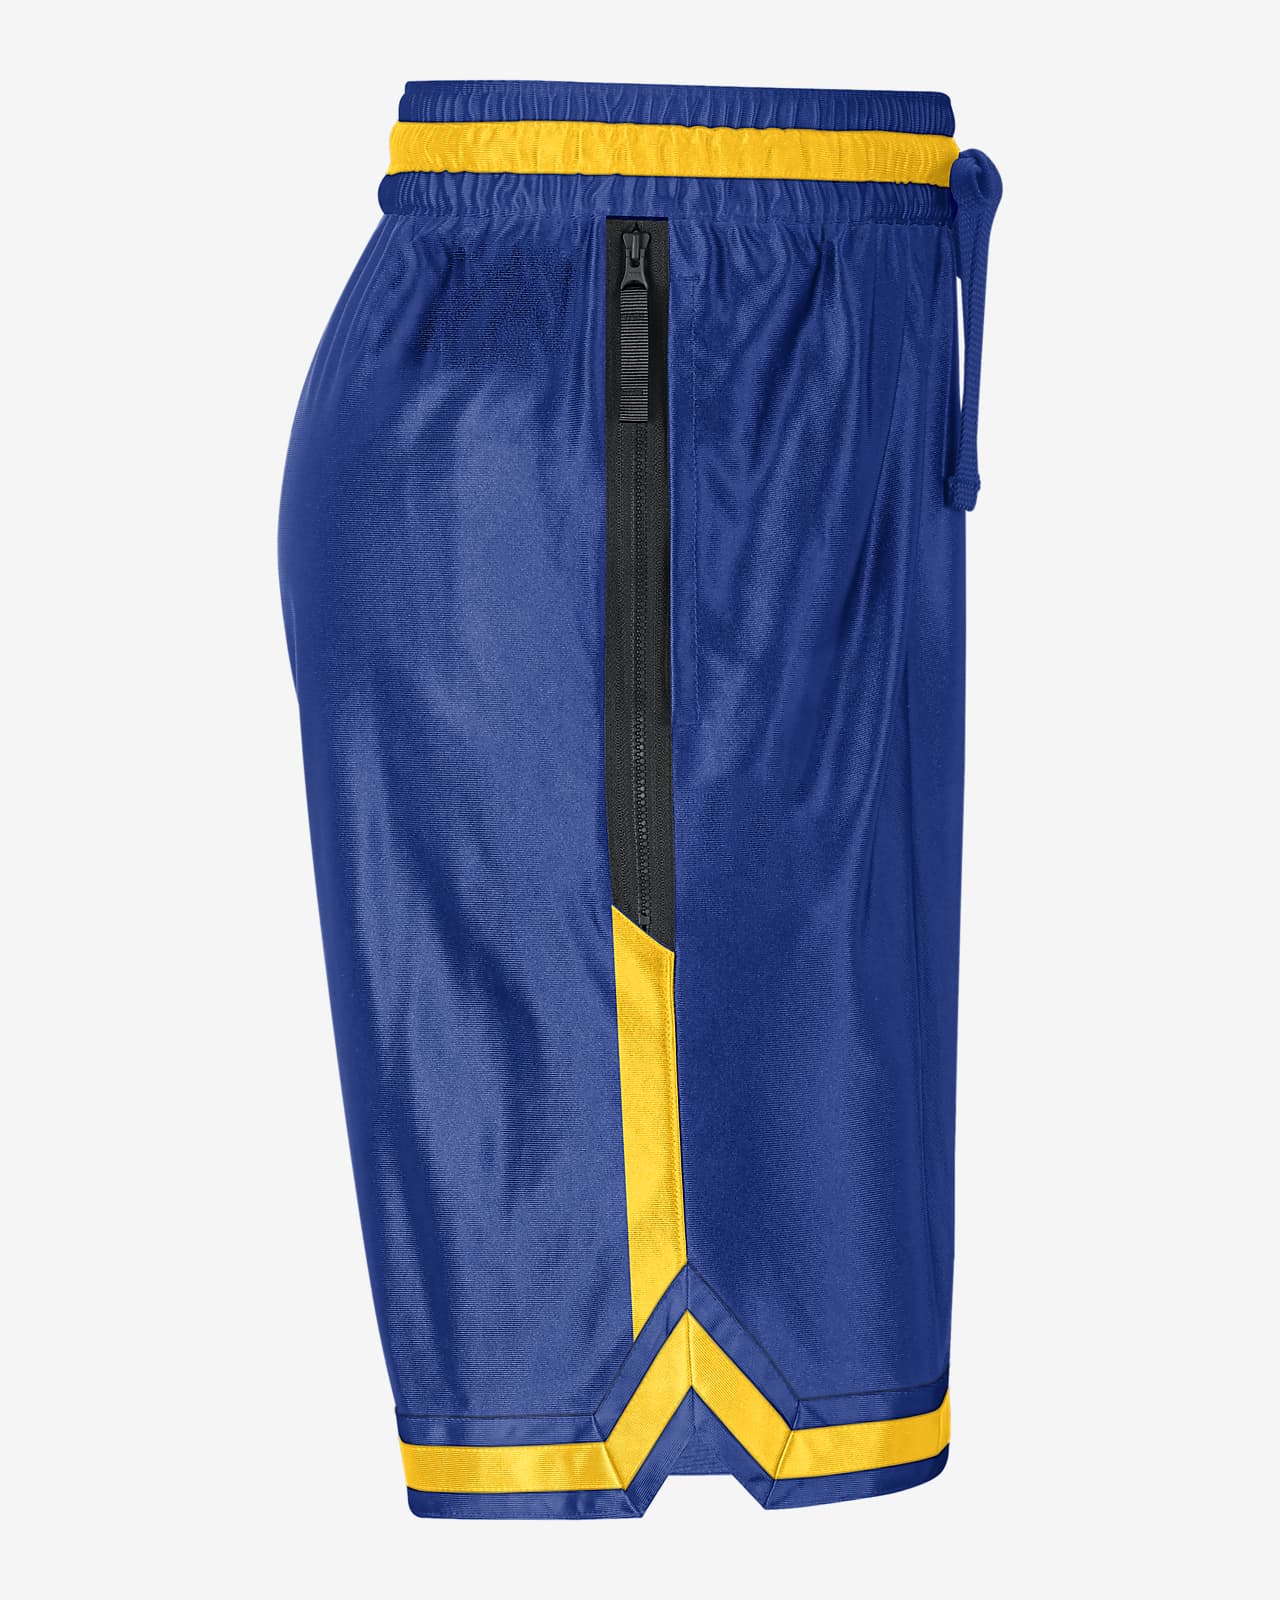 Nike Men's Golden State Warrior Blue Dri-Fit Swingman Shorts, XXL